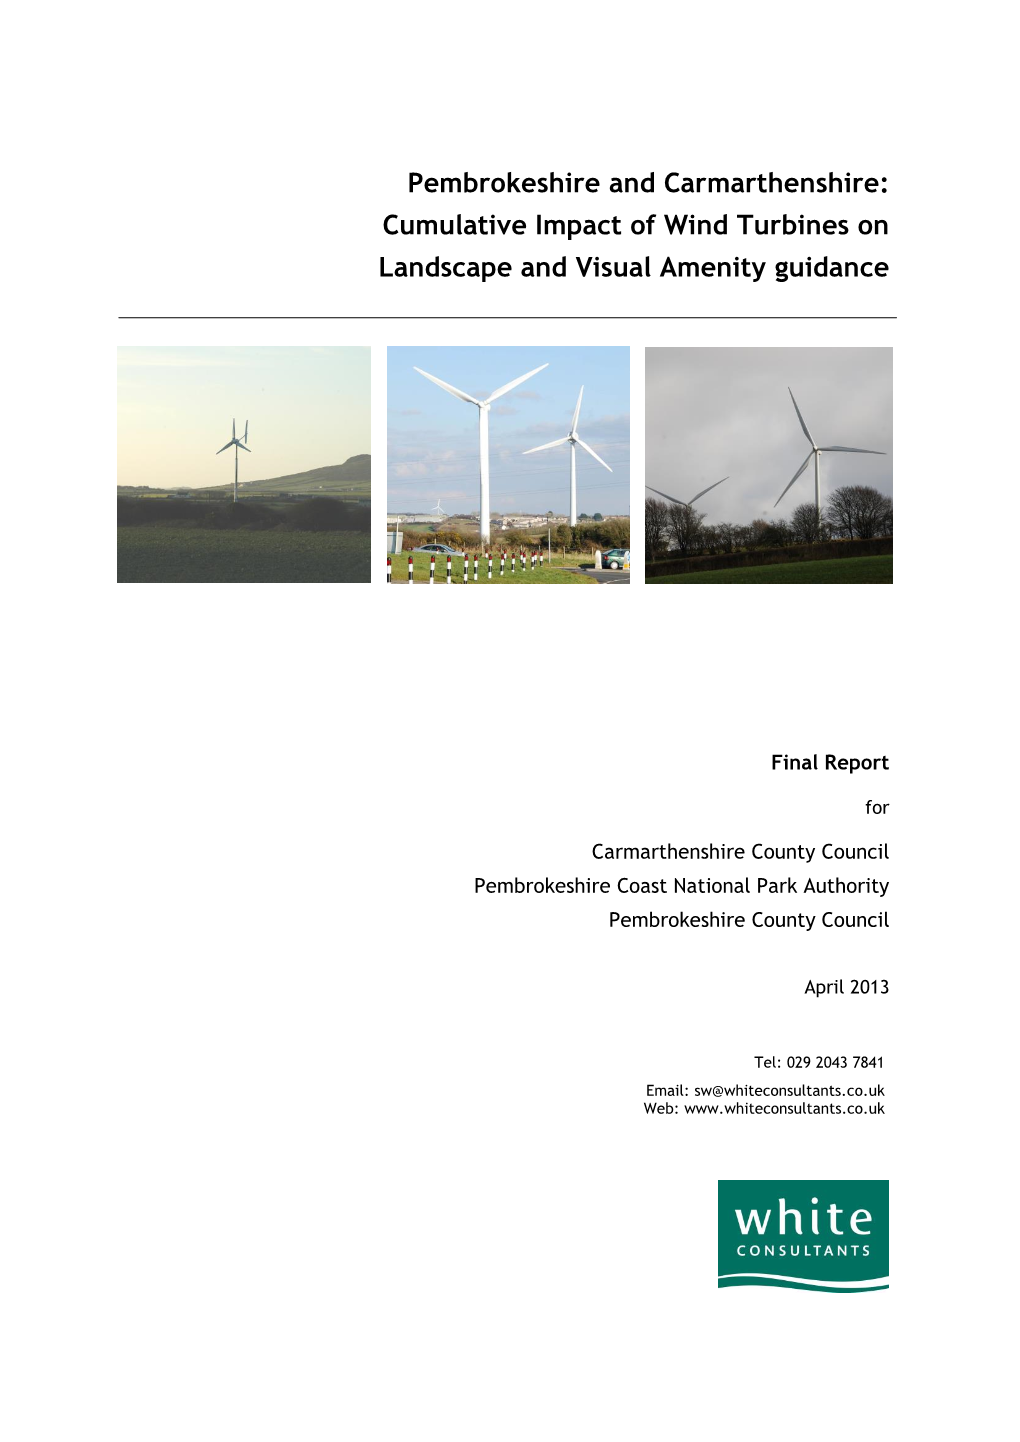 Cumulative Impact of Wind Turbines on Landscape & Visual Amenity Guidance